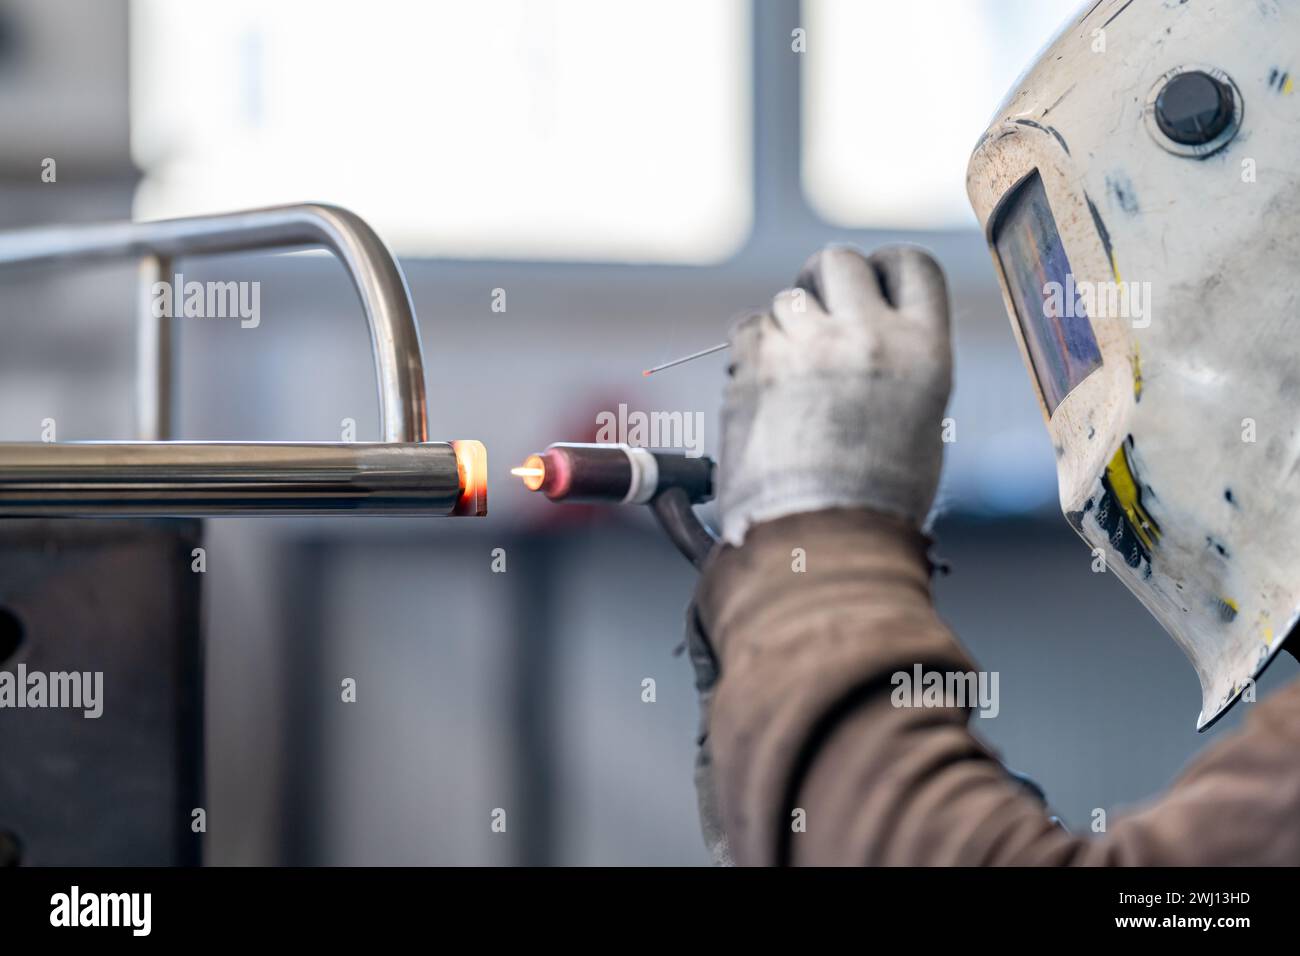 A man wearing a welding helmet is using a welding machine to weld a metal pipe Stock Photo